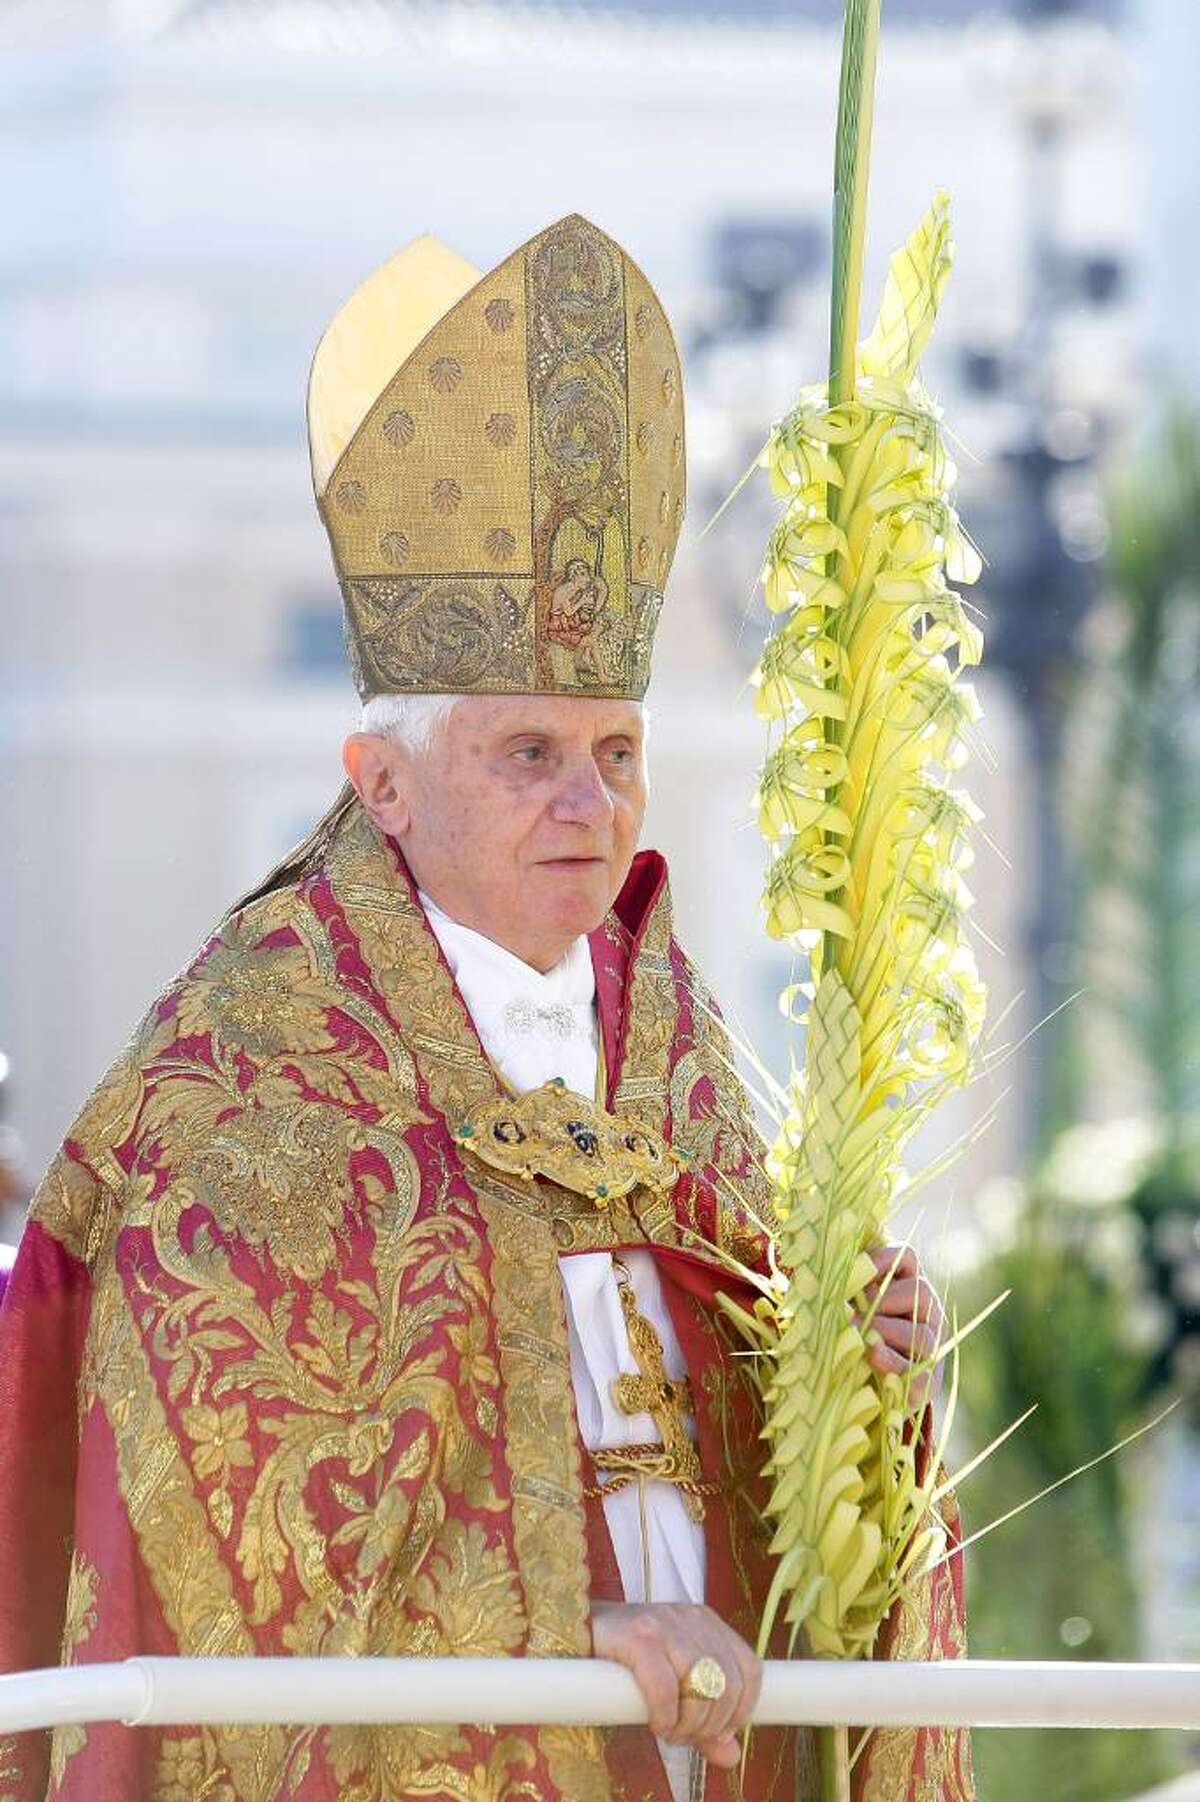 The Pope's Palm Sunday mass